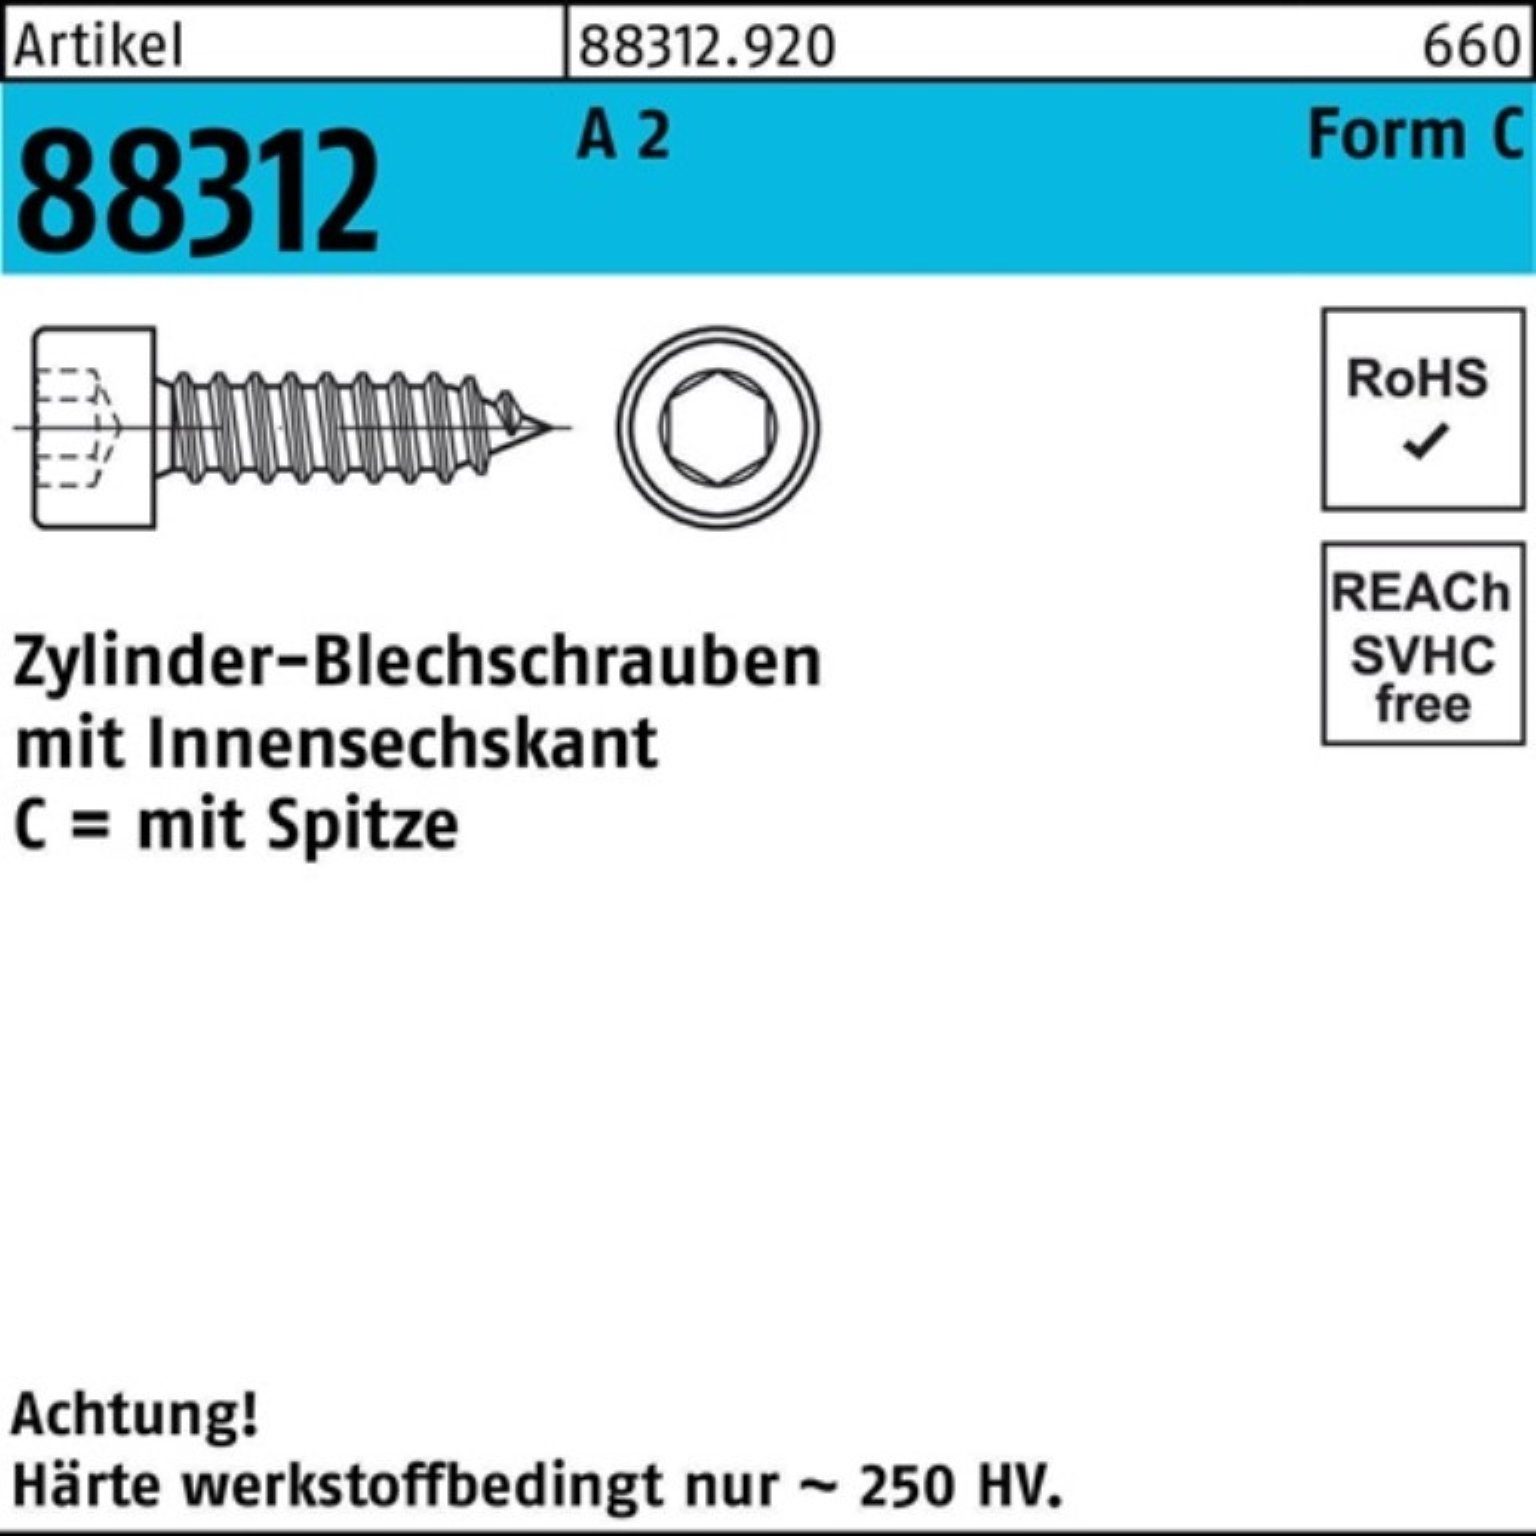 Reyher Blechschraube 200er Pack Zylinderblechschraube R 88312 Spitze/Innen-6kt C 6,3x 45 A